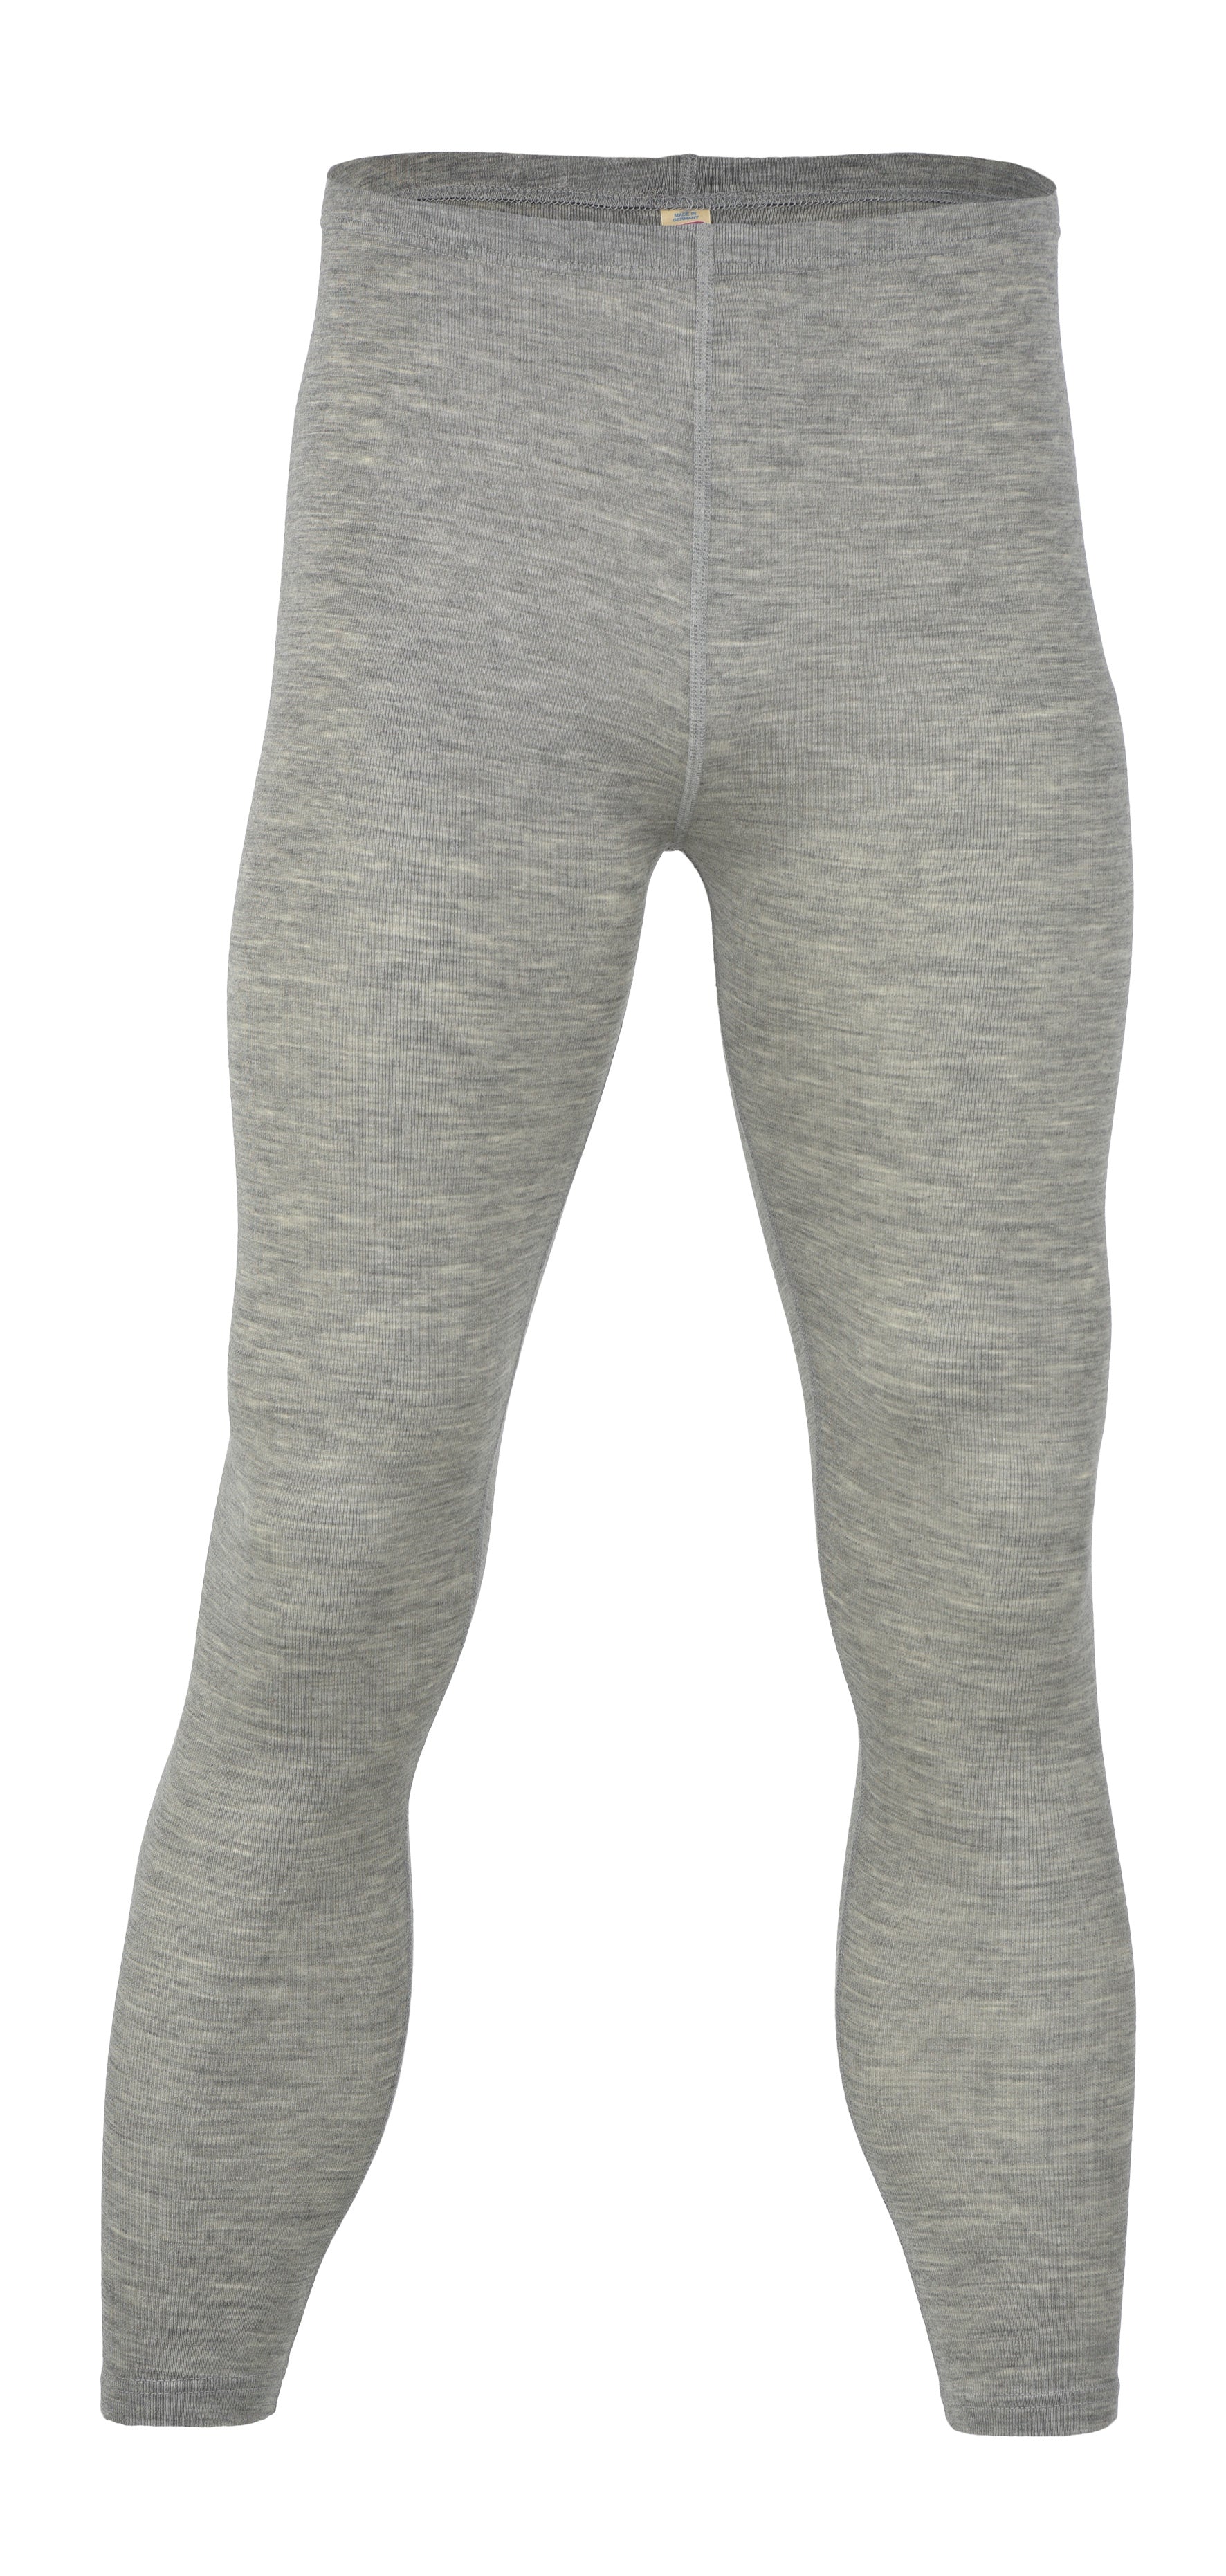 ENGEL - Kids Thermal Underwear Leggings: Base Layer Long Johns Lounge Pants,  Organic Merino Wool and Silk